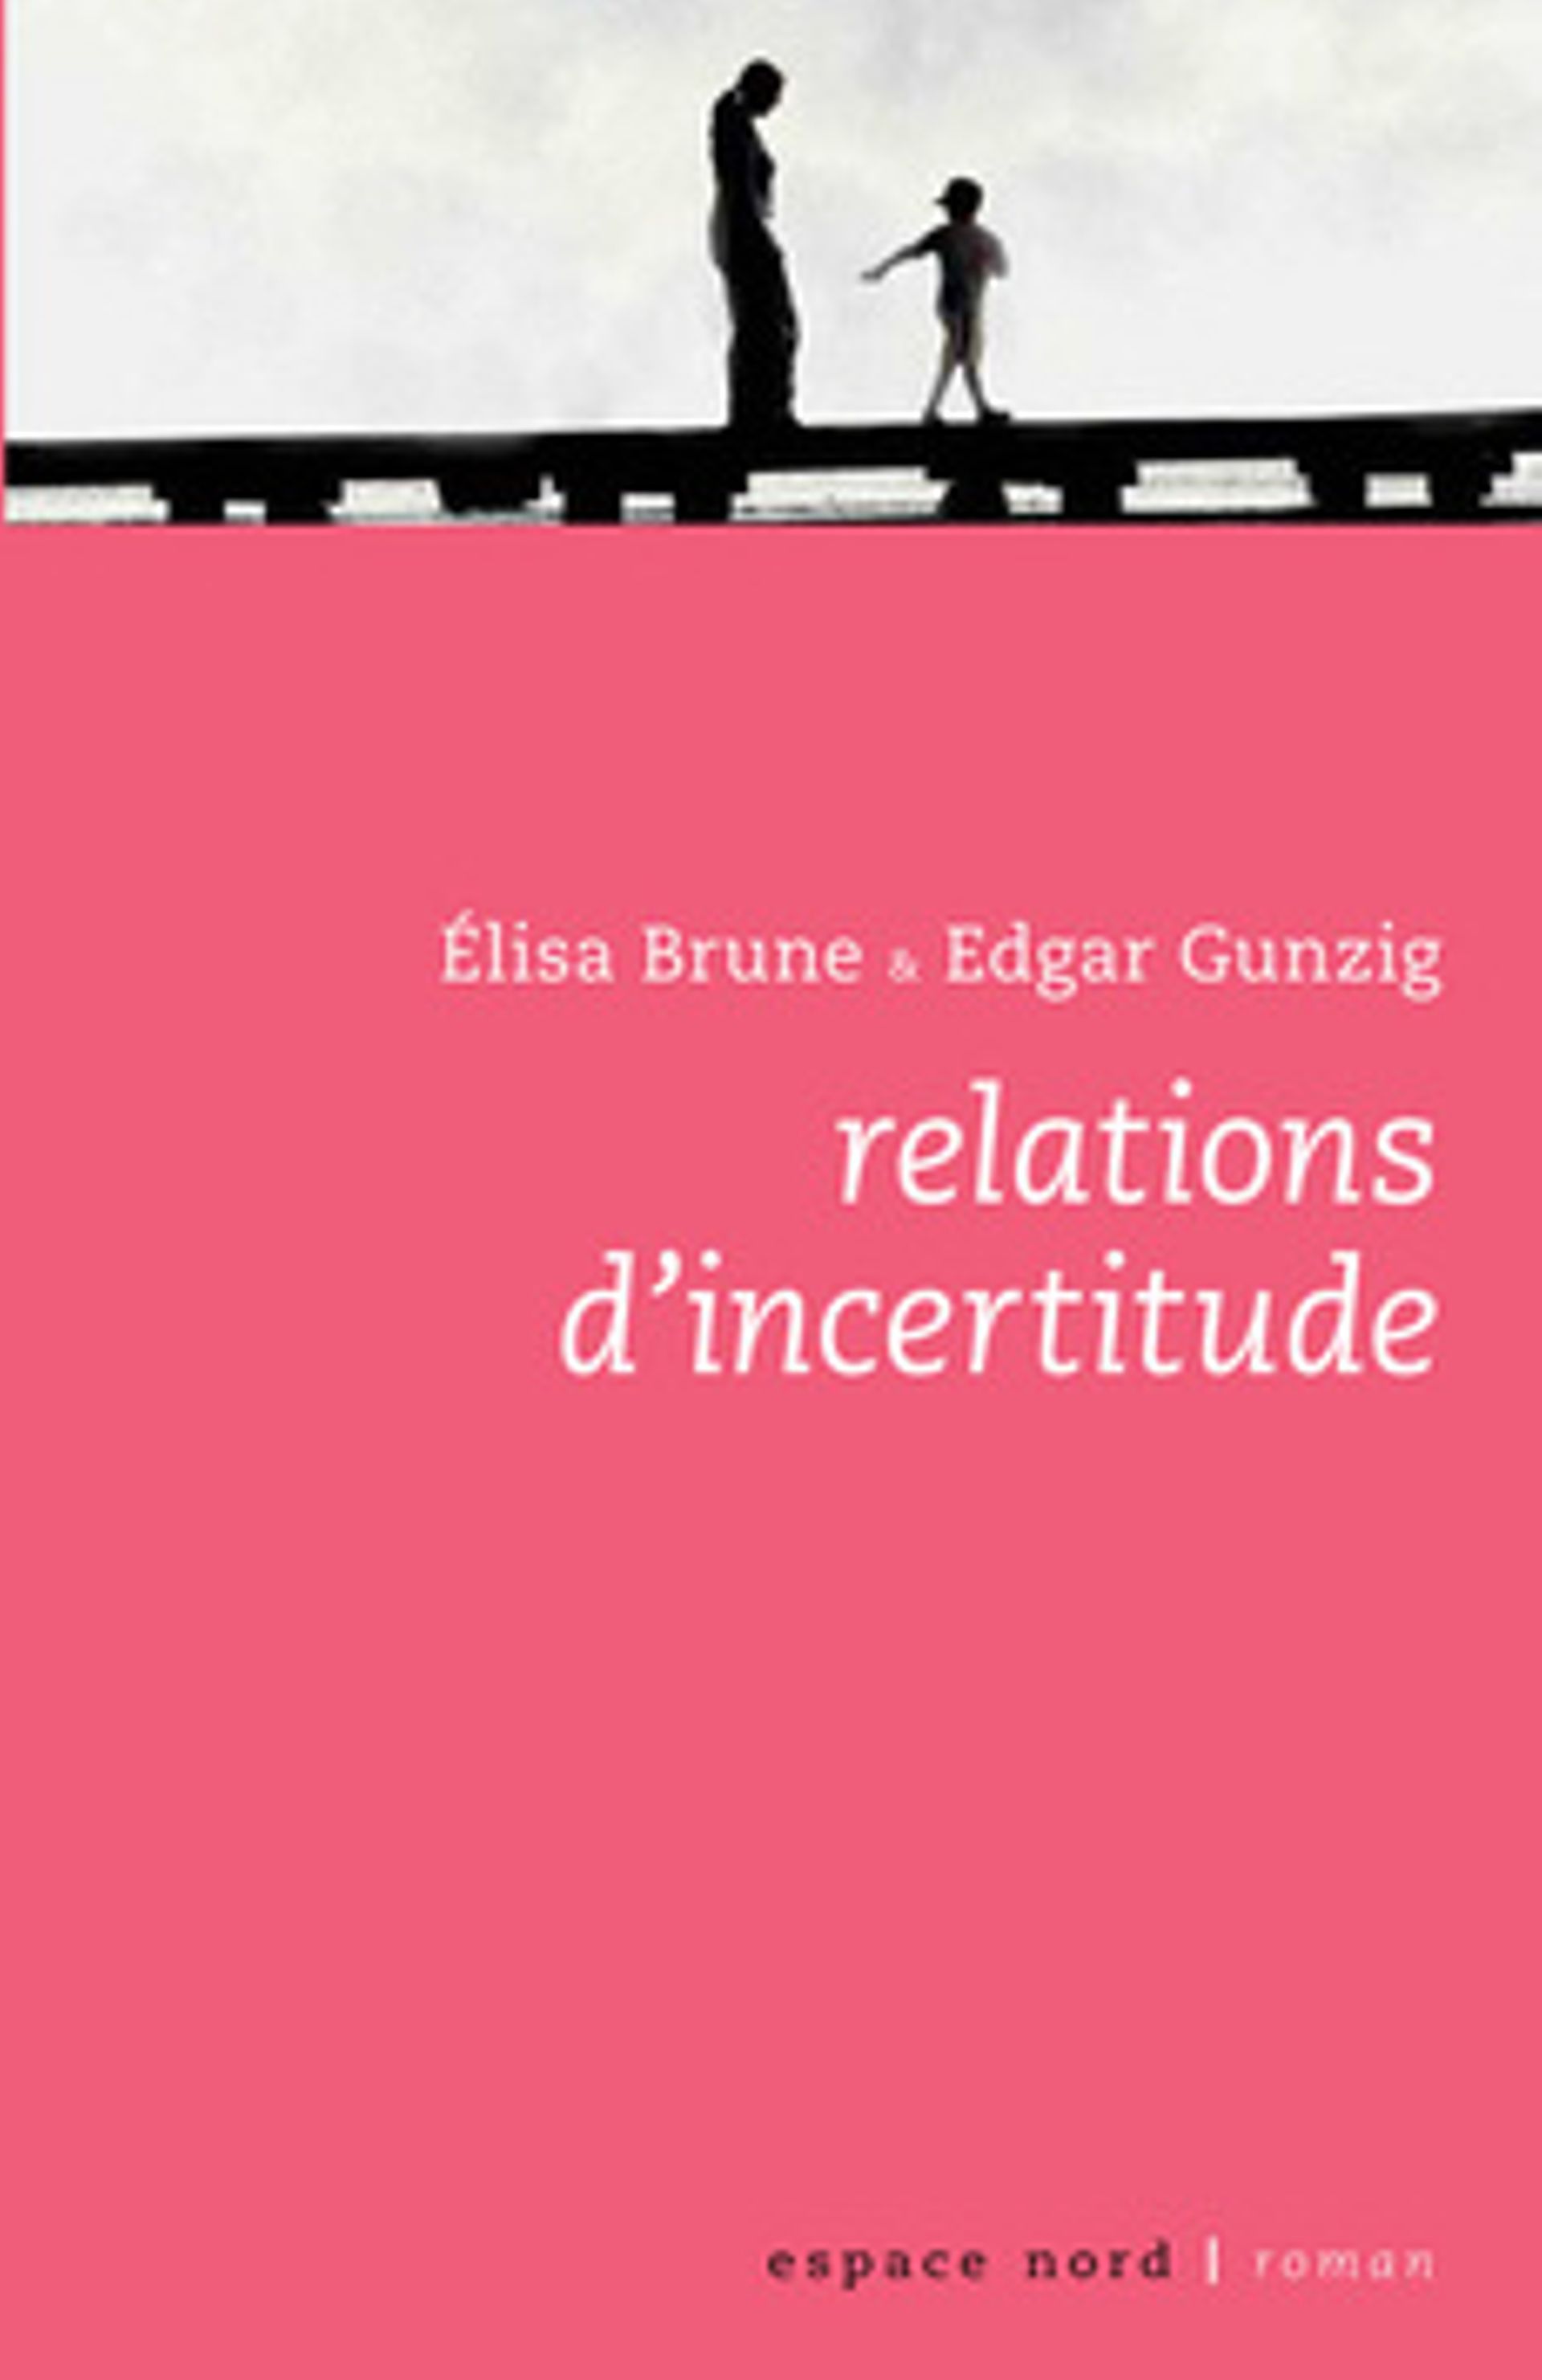  «Relations d’incertitude» Elisa Brune & Edgar Gunzig – Ed Espace Nord 